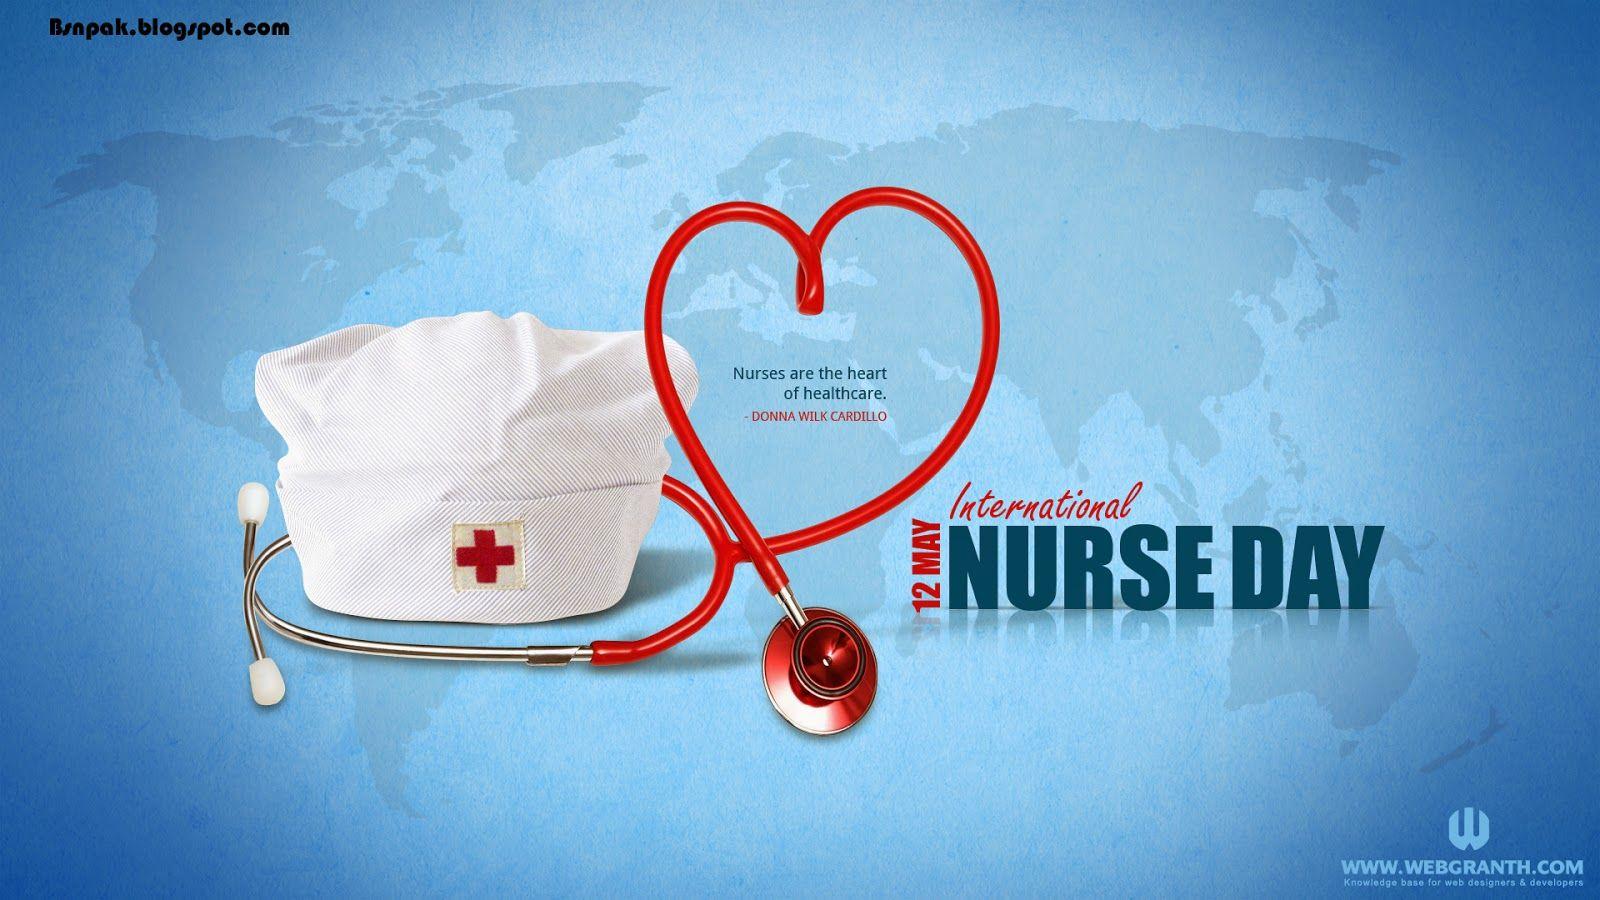 Nursing Wallpapers, High Quality Image of Nursing in Great